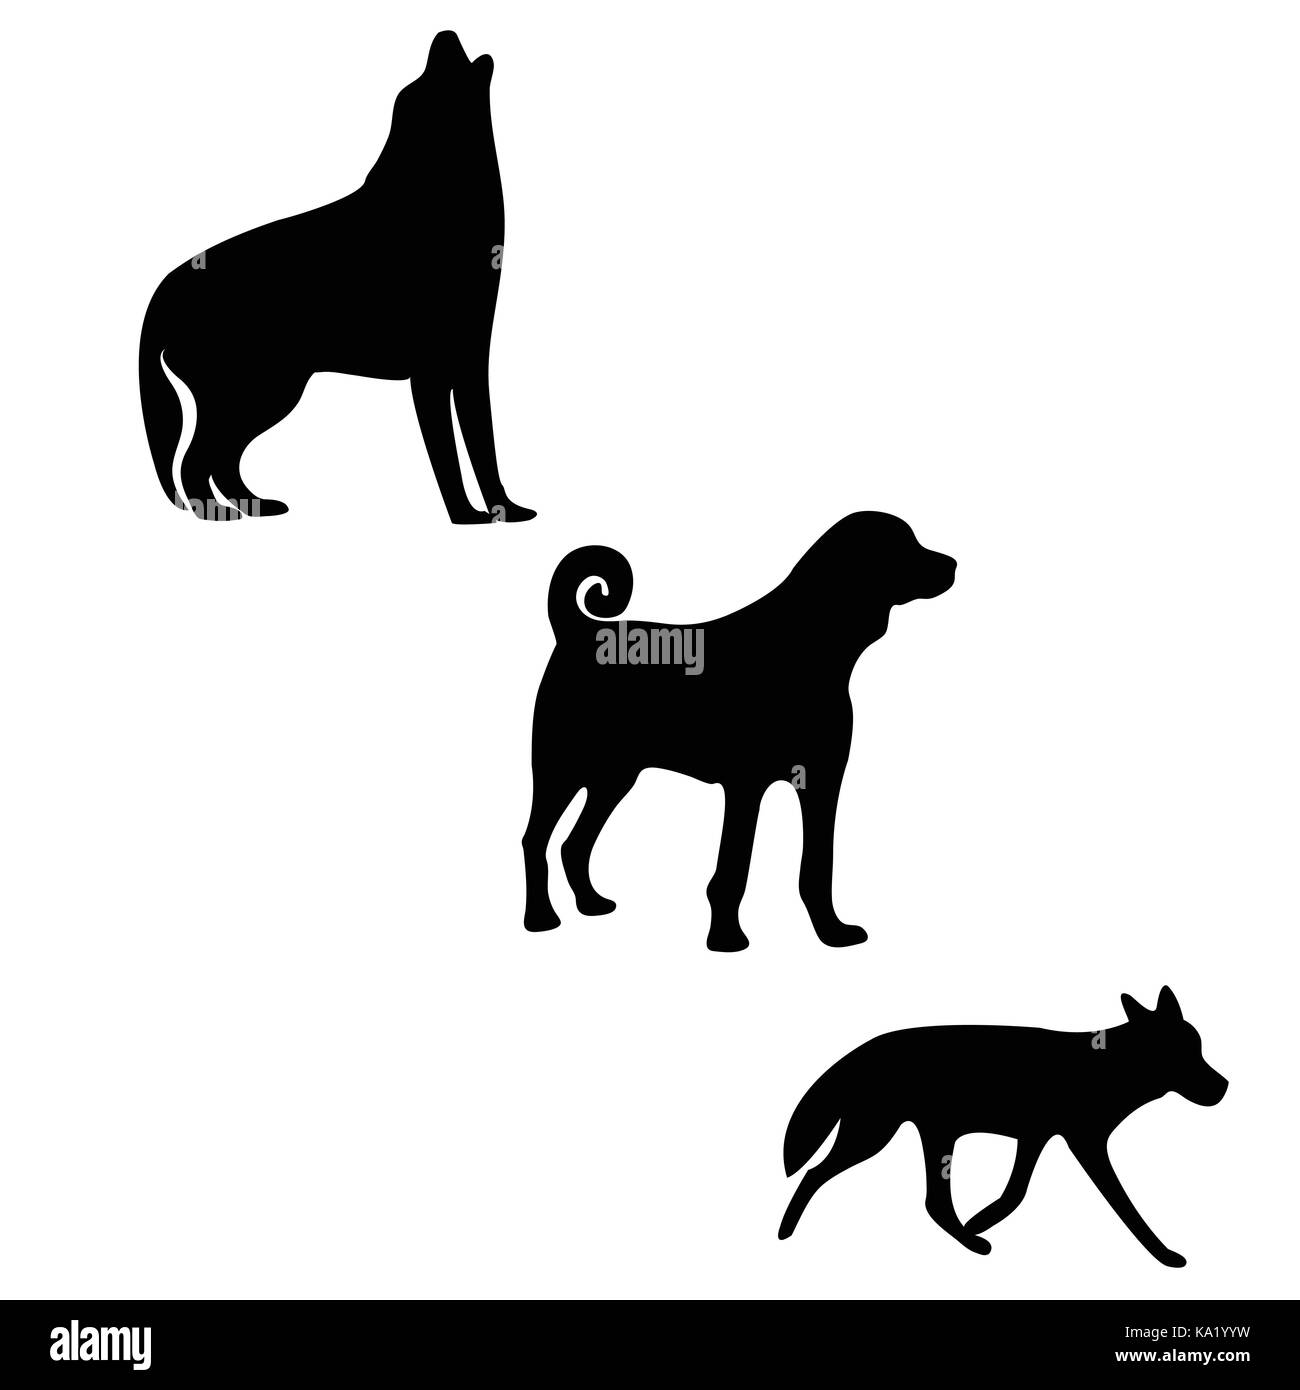 Three silhouettes of logo animals Stock Vector